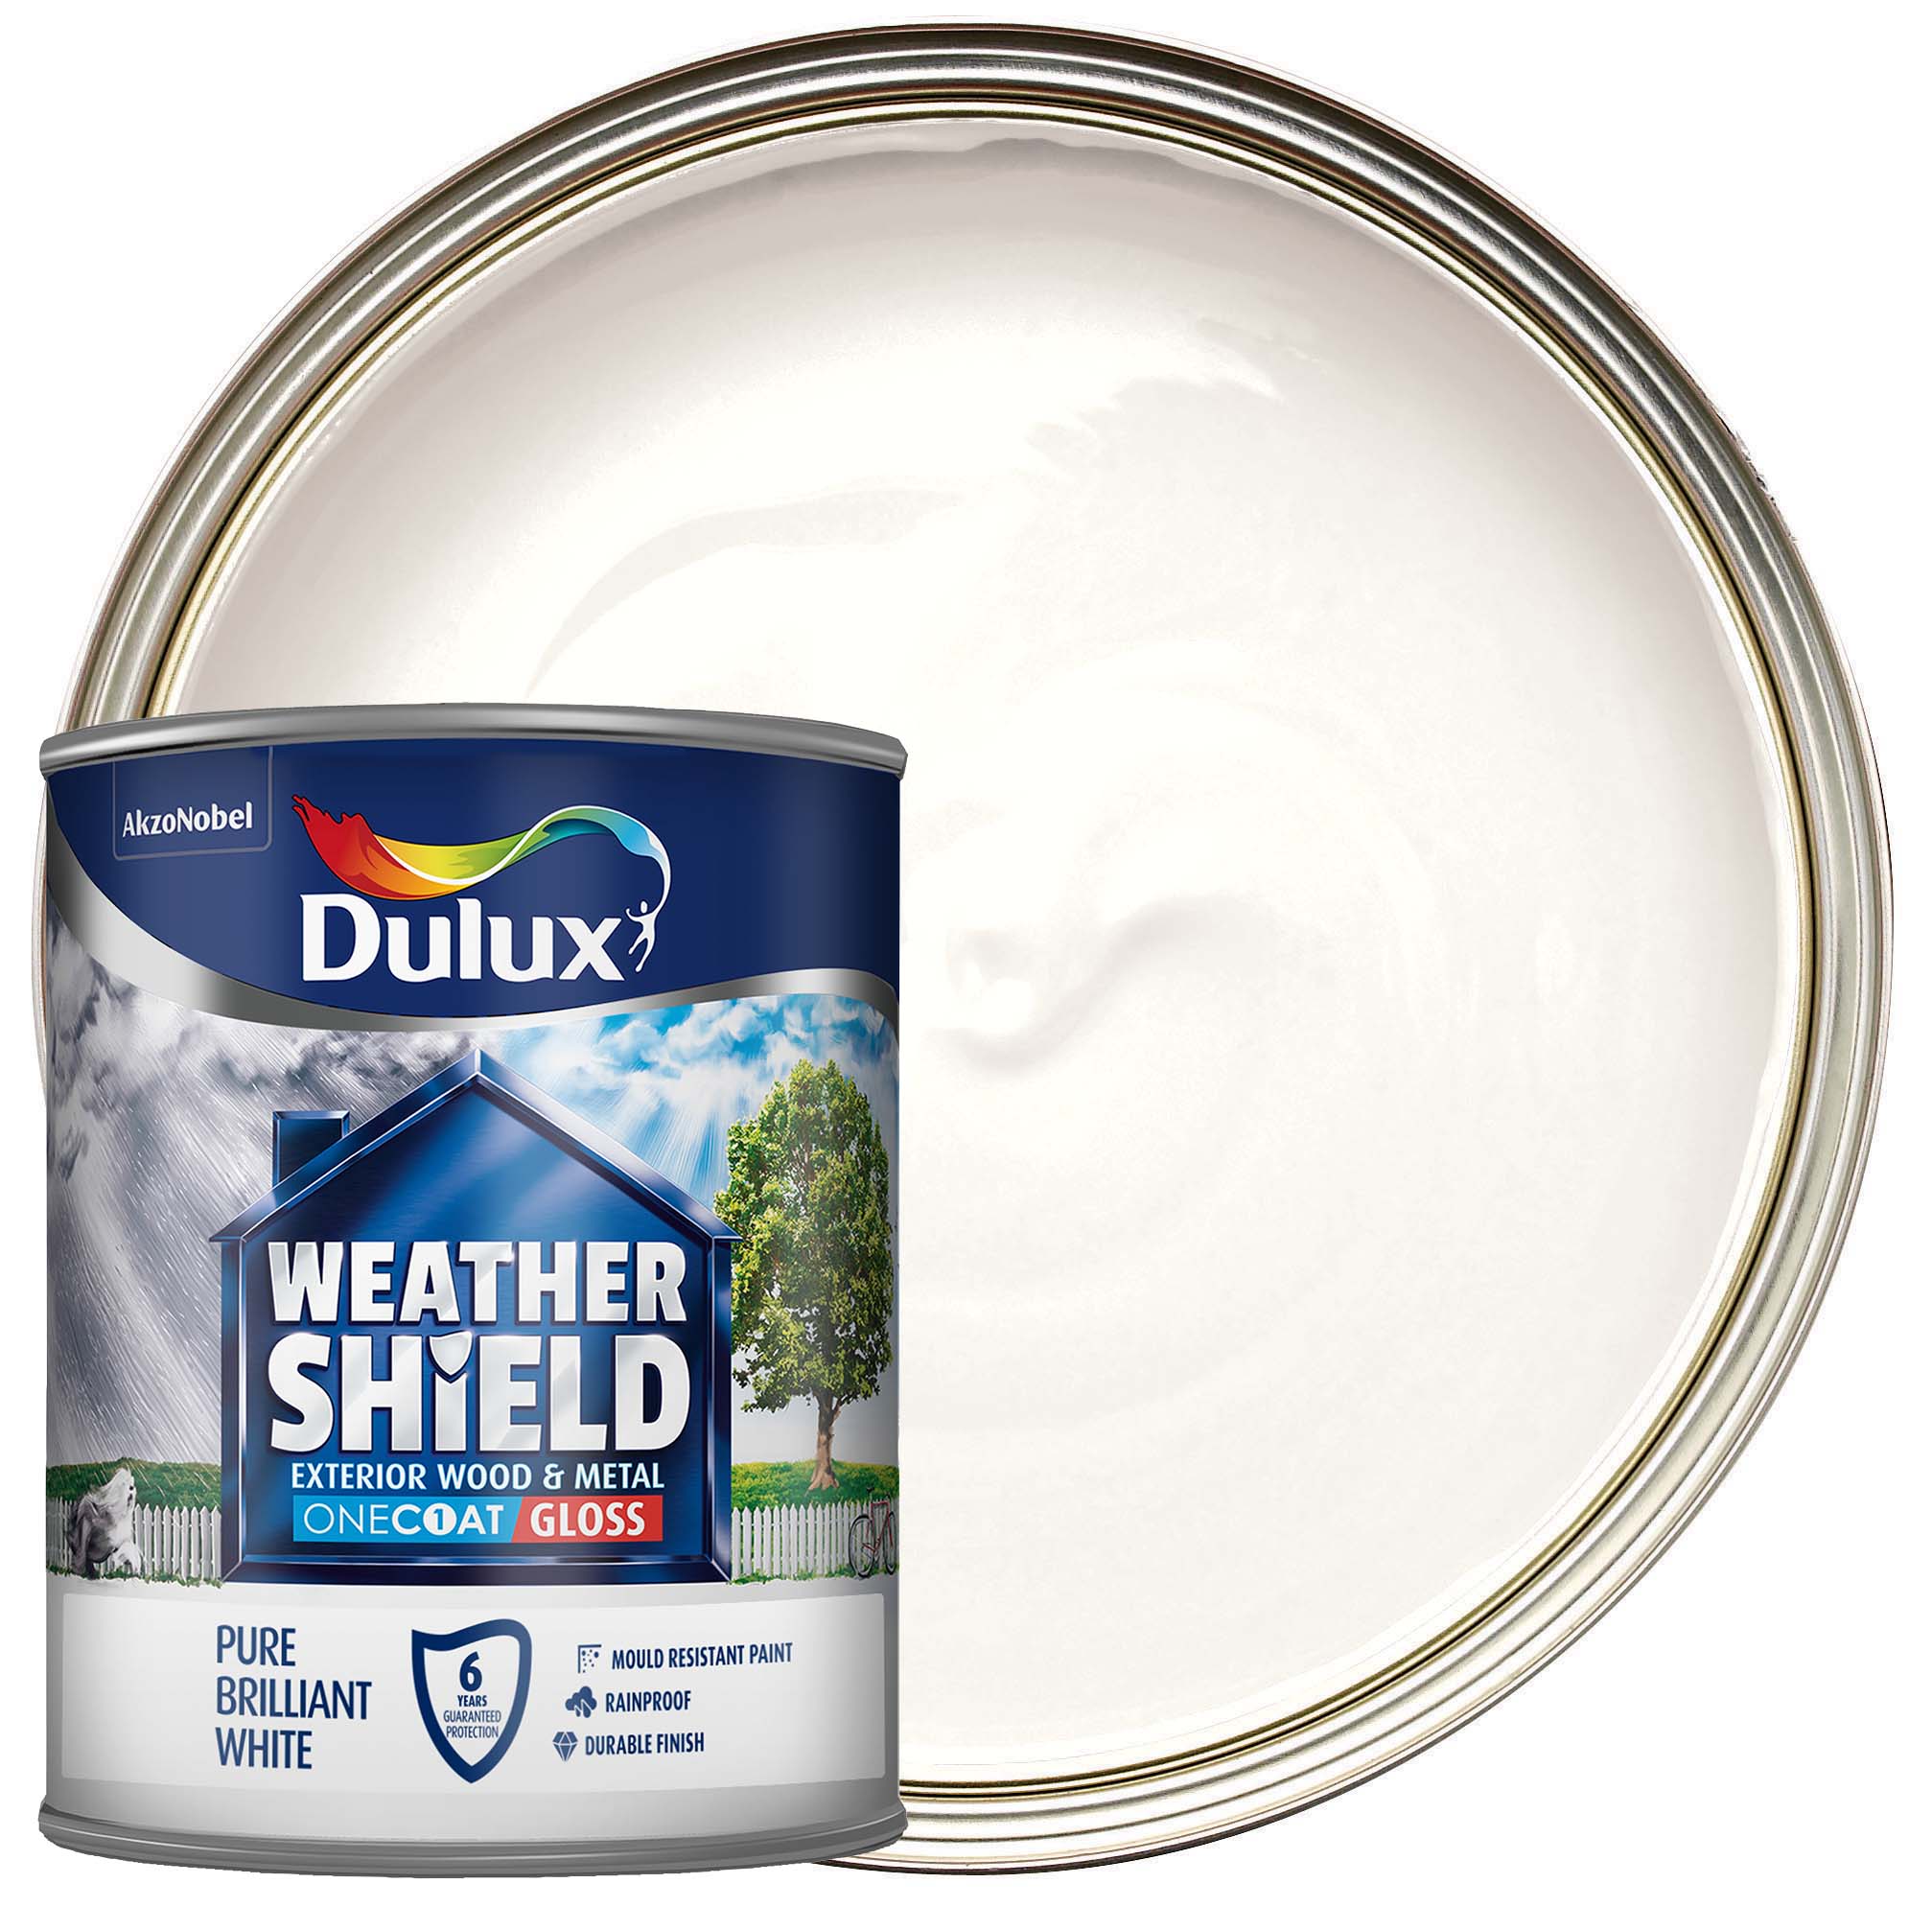 Dulux Weathershield One Coat Gloss Paint - Pure Brilliant White - 750ml